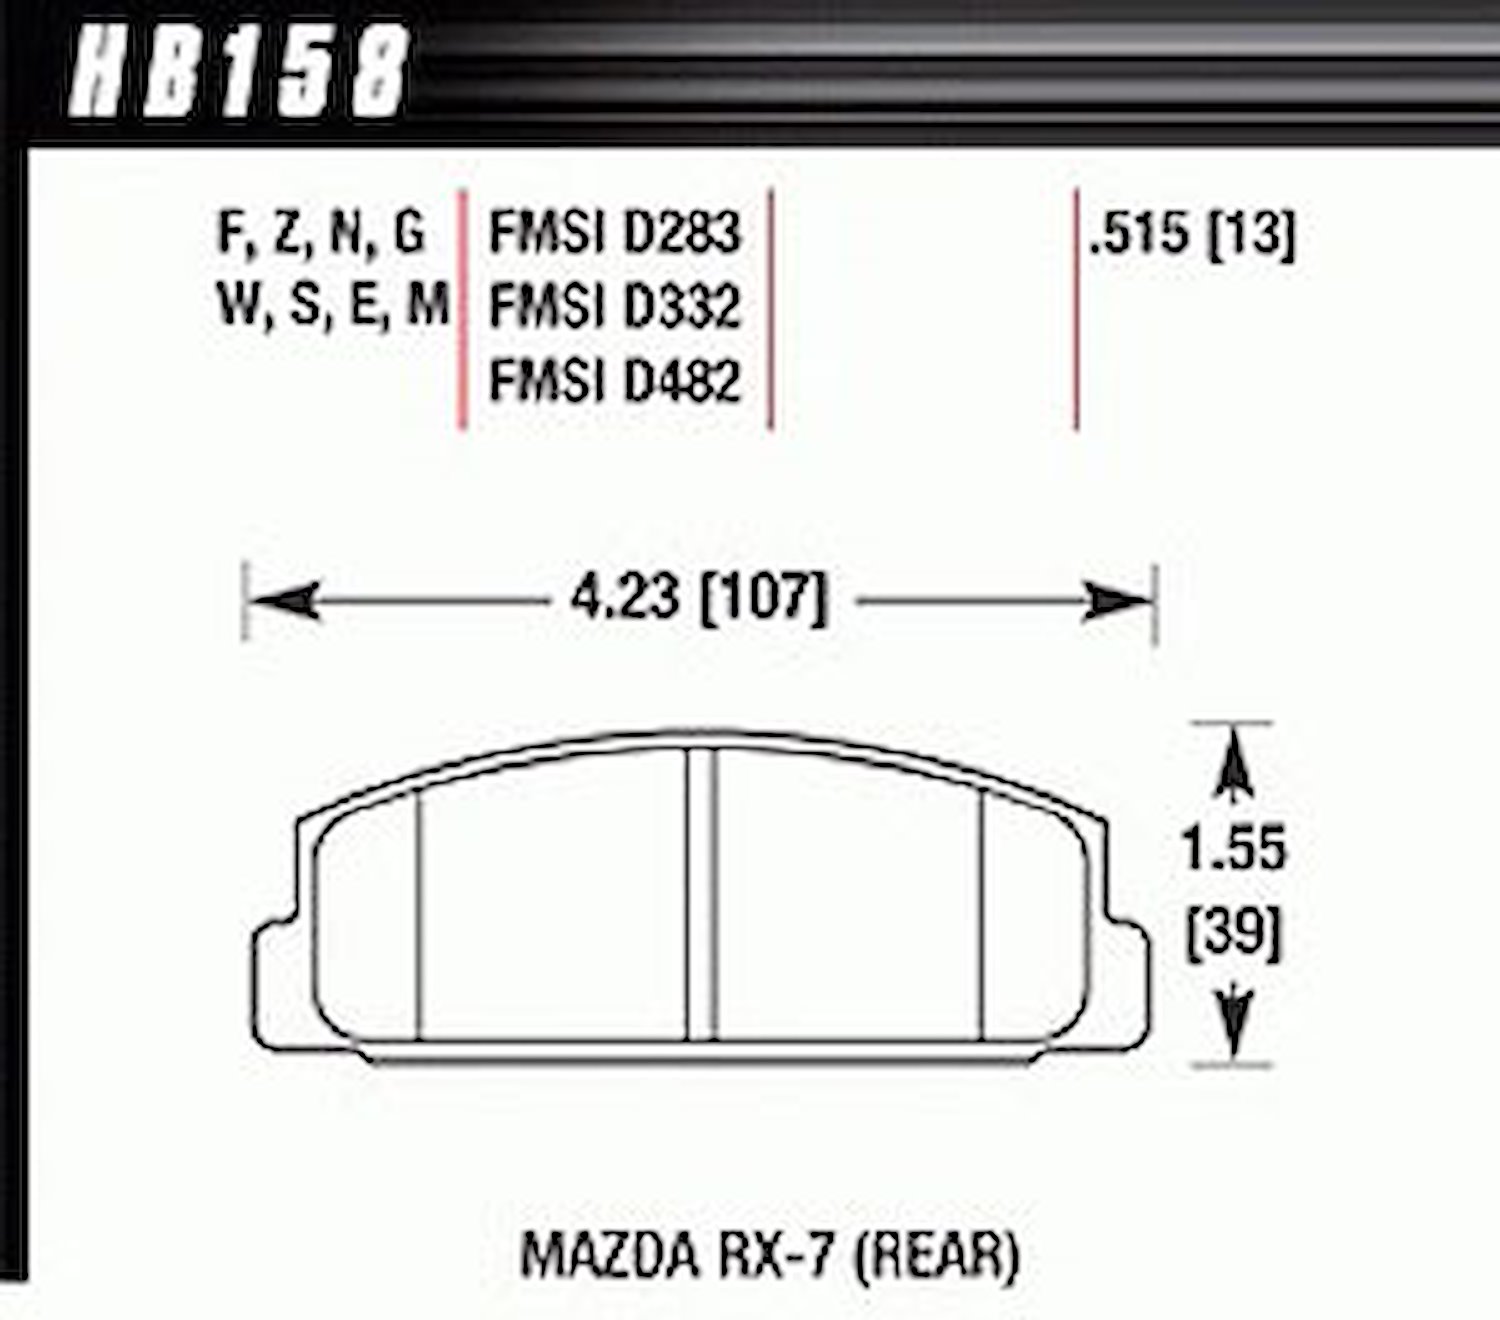 HT-10 PADS Mazda RX-7 Rear